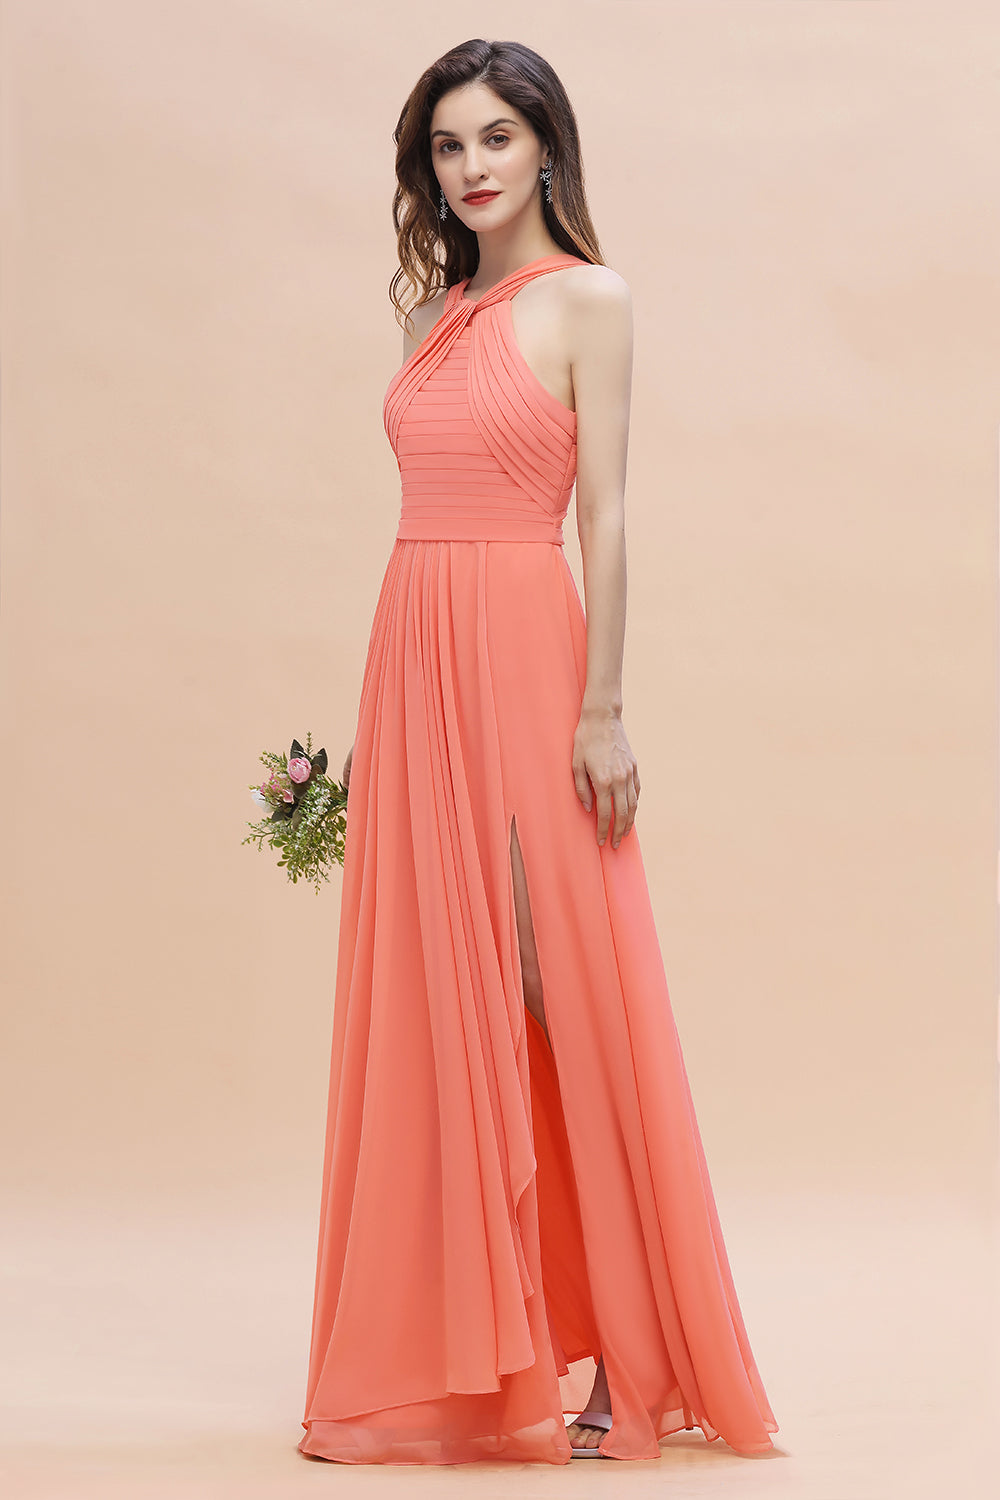 Gorgeous A-Line Sleeveless Coral Chiffon Bridesmaid Dress with Ruffles On Sale-27dress